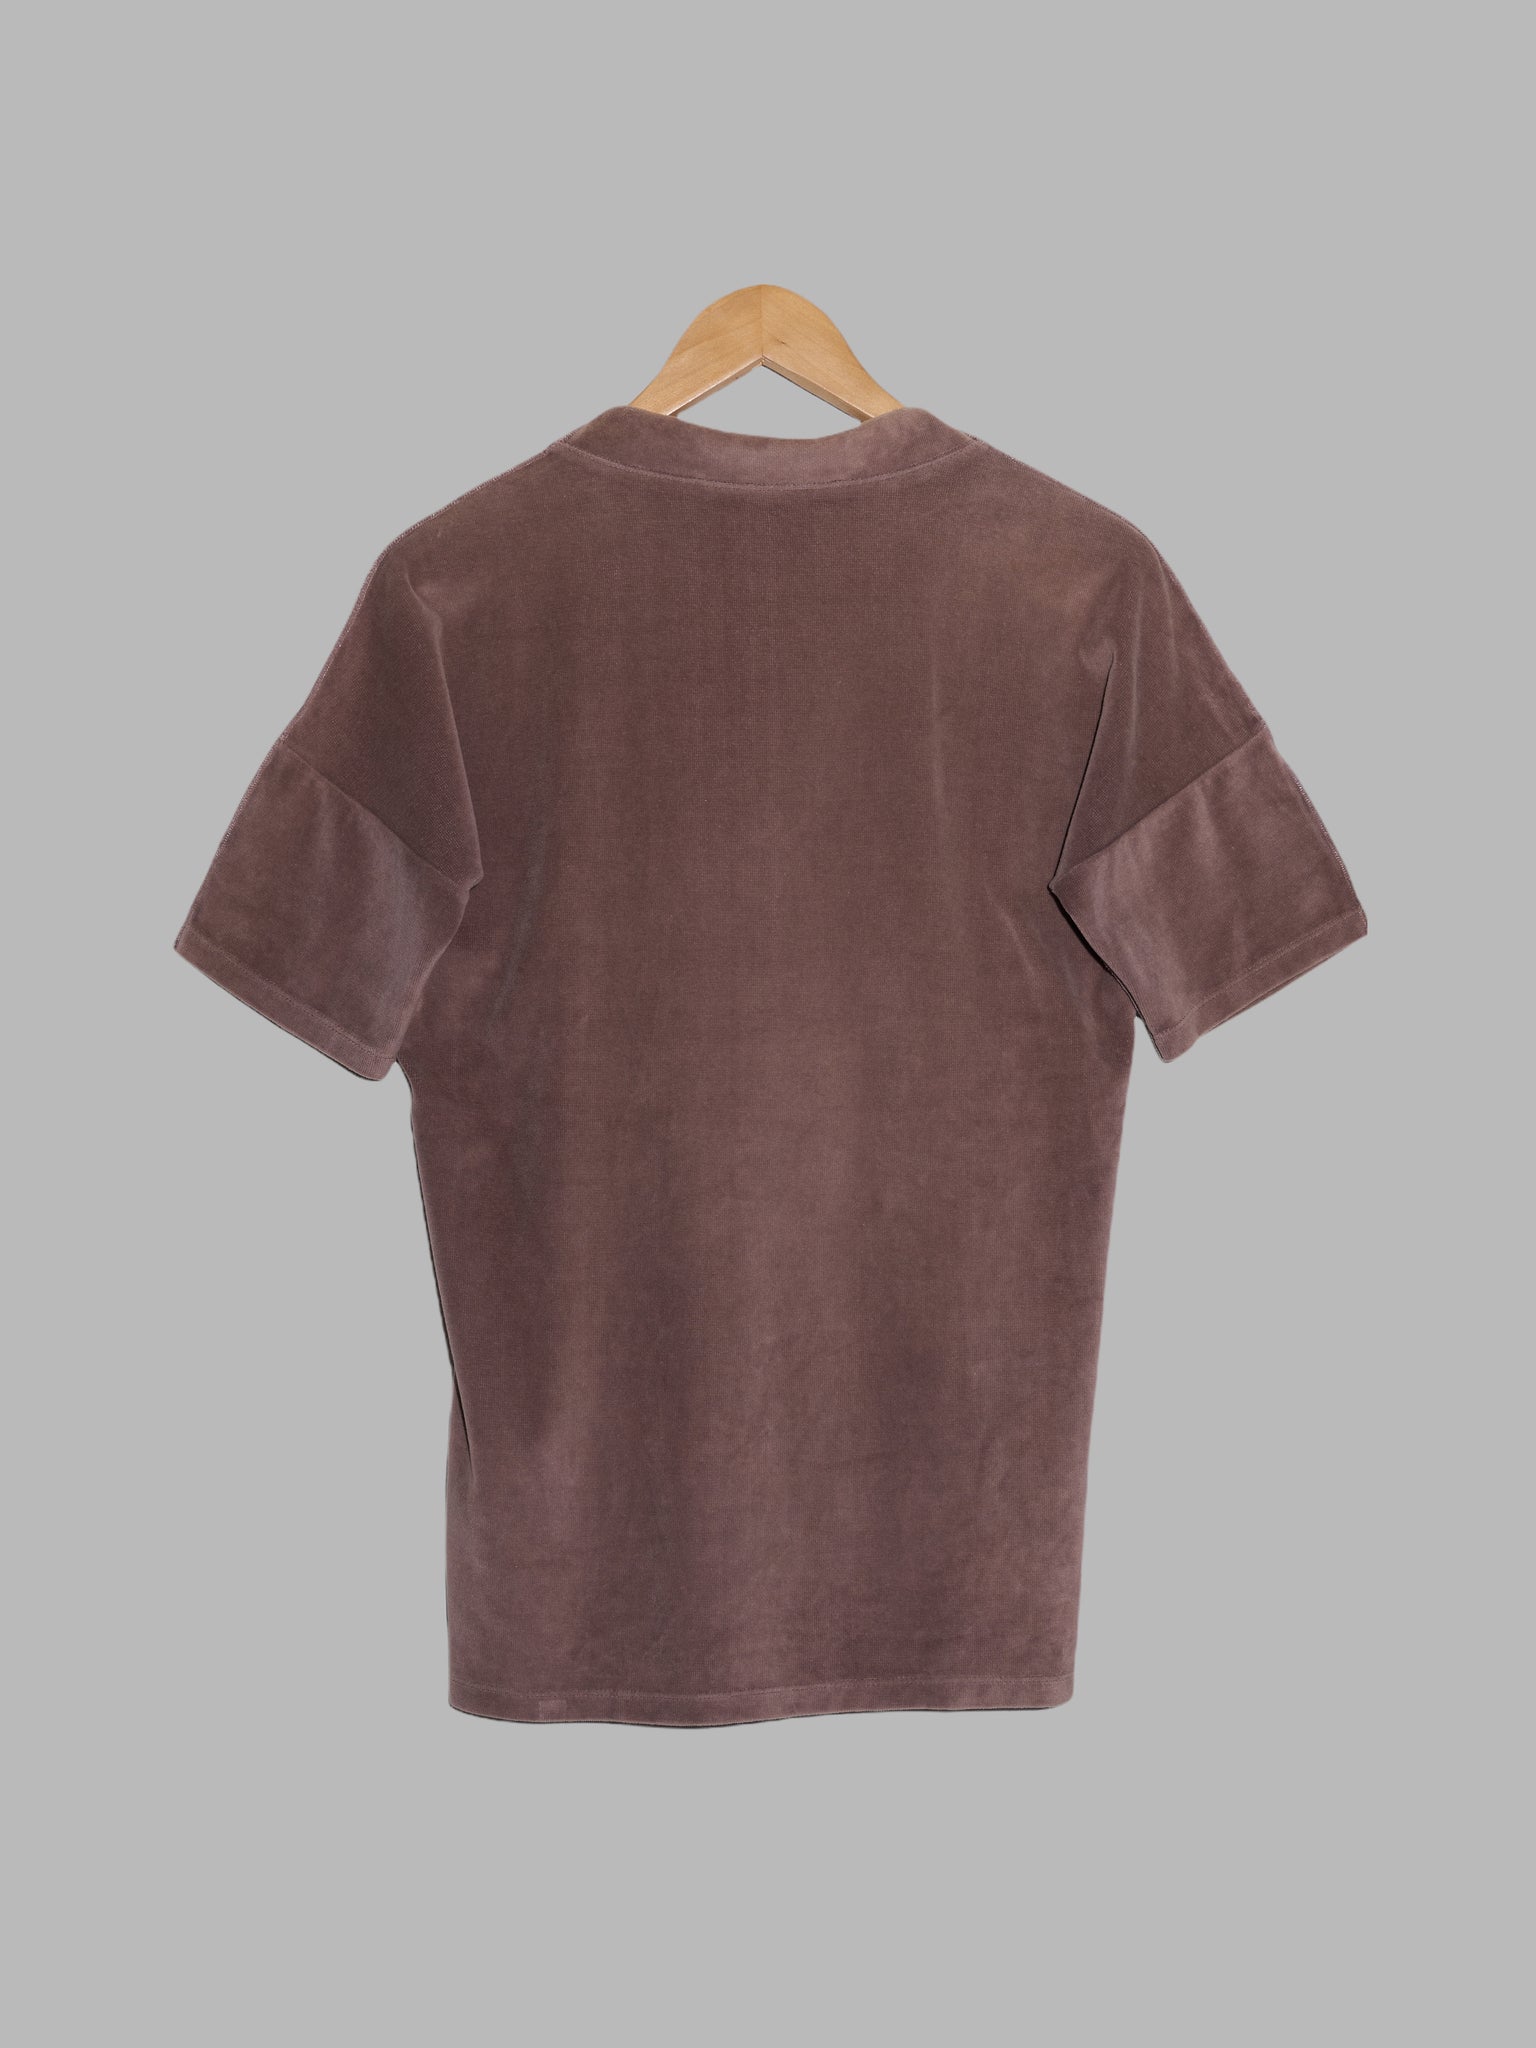 Jean Colonna brown velour v-neck t-shirt - M